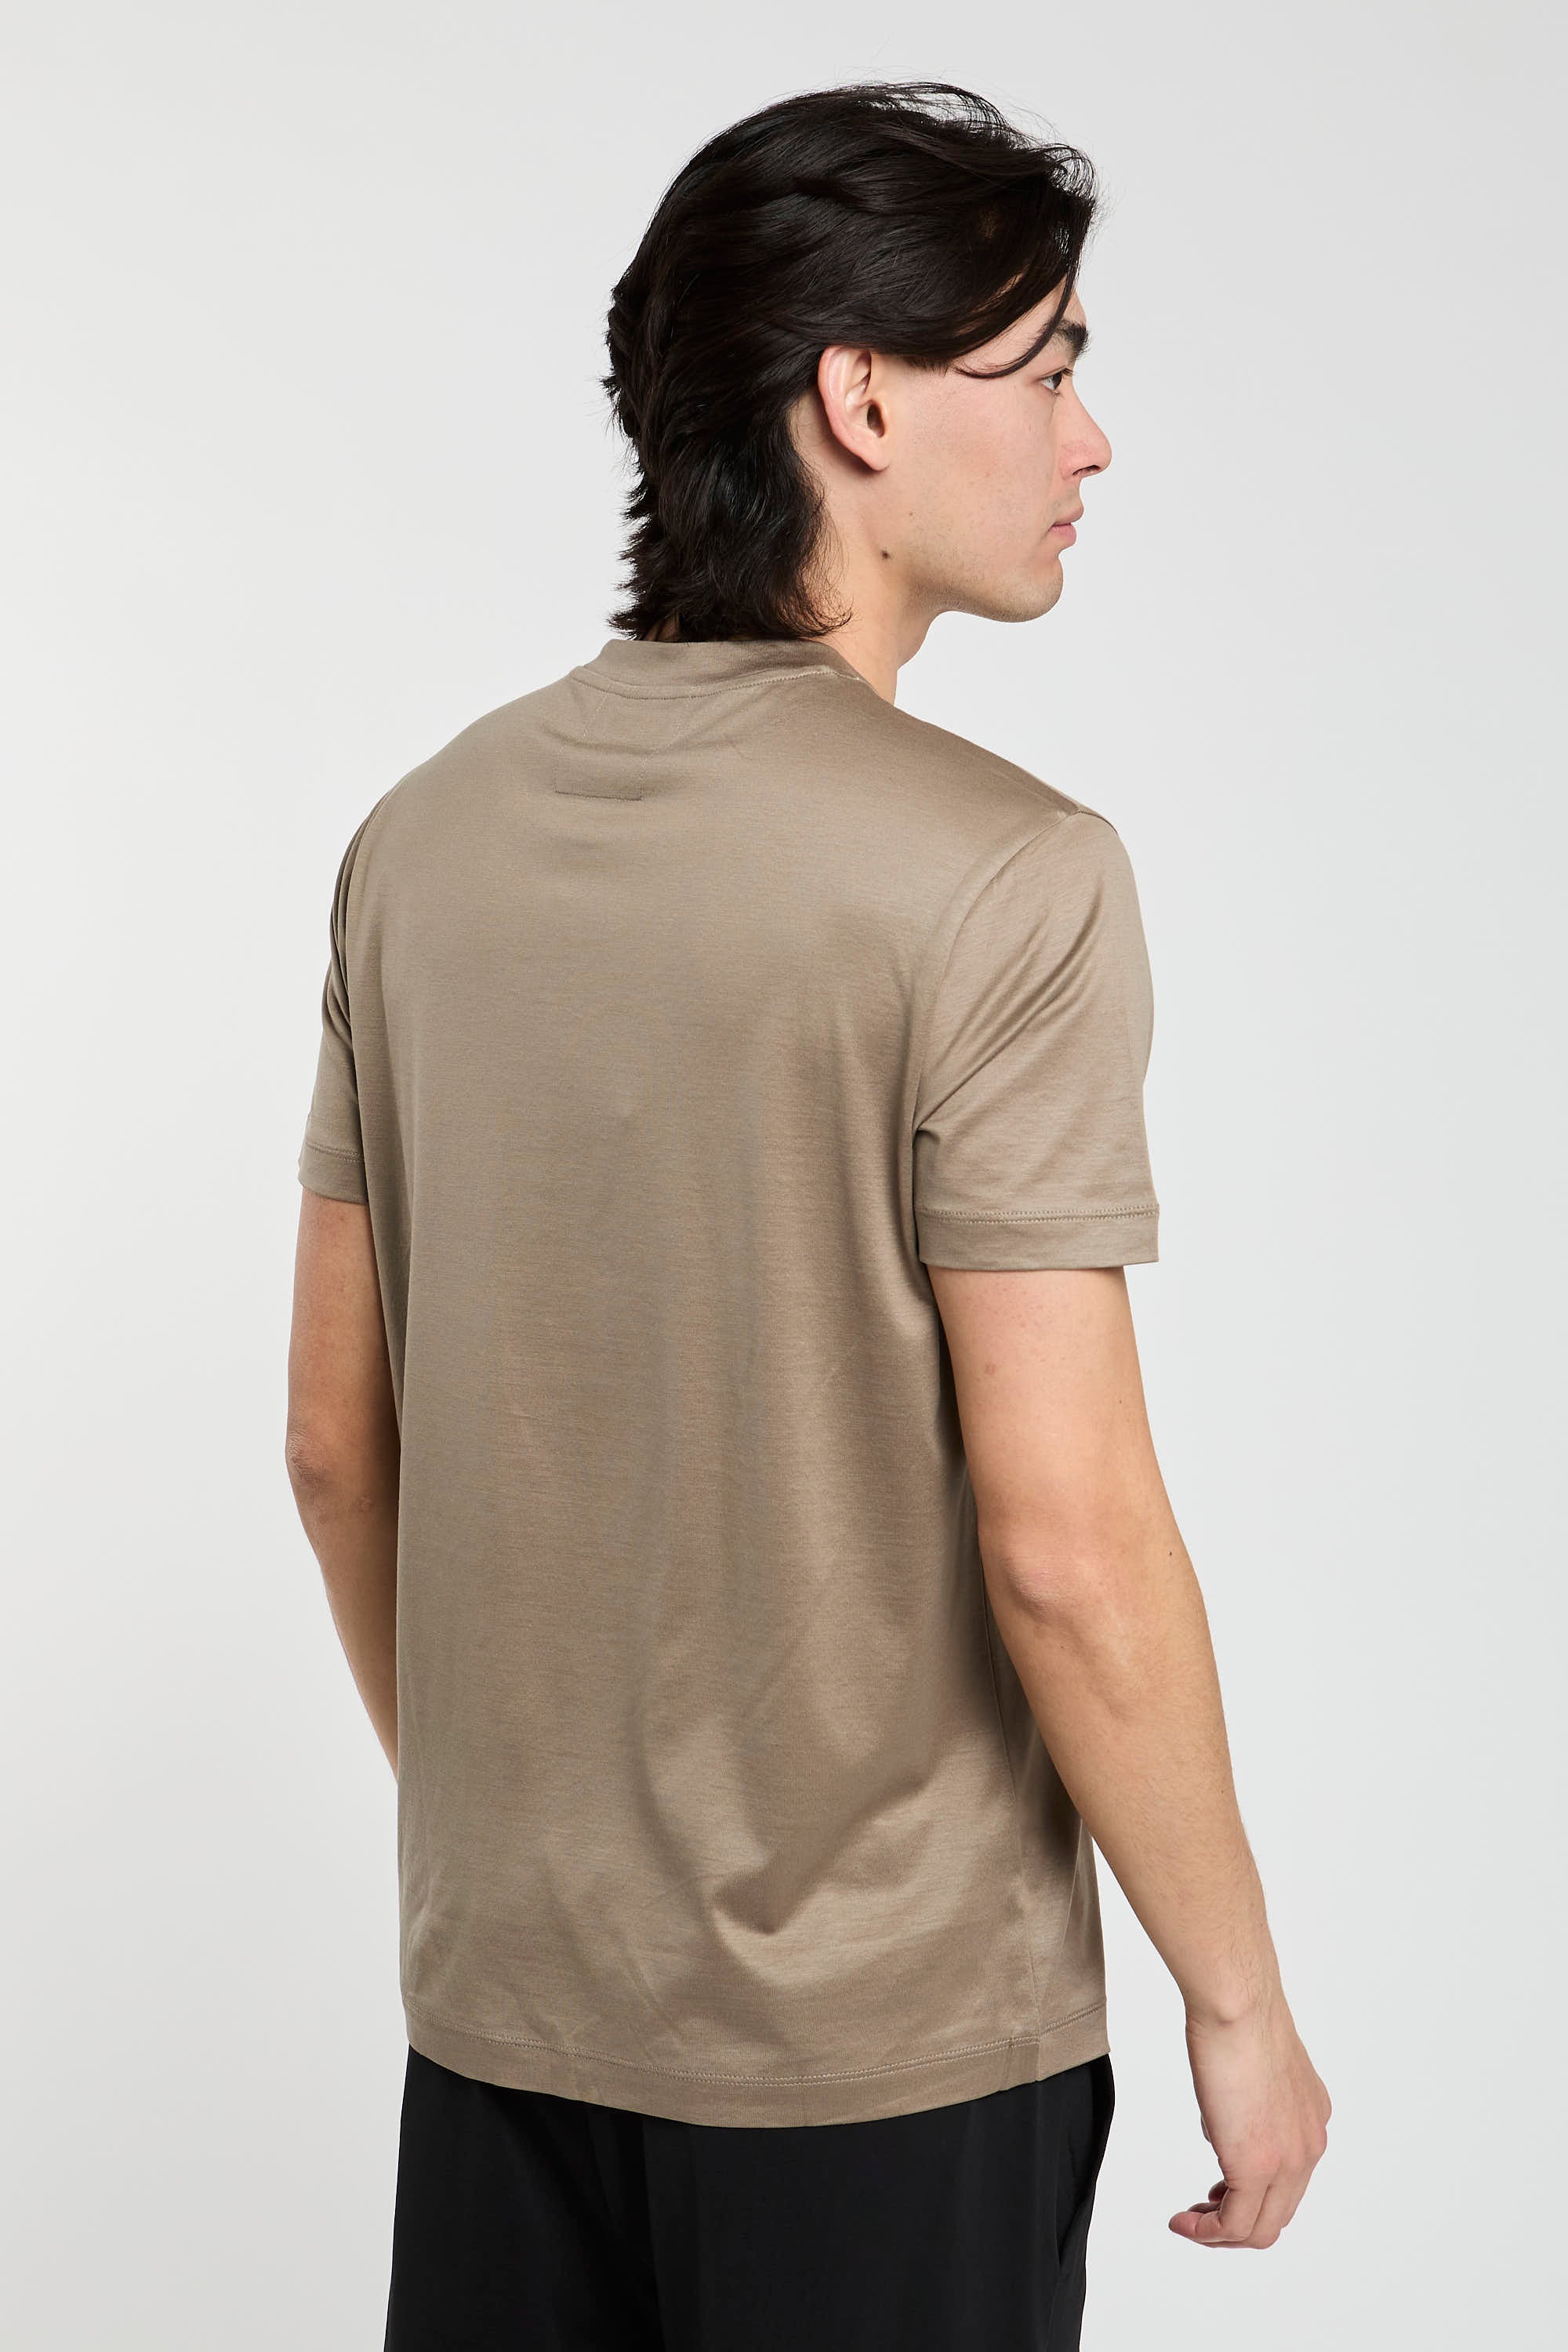 Emporio Armani T-shirt Mixed Lyocell/Cotton Brown-4